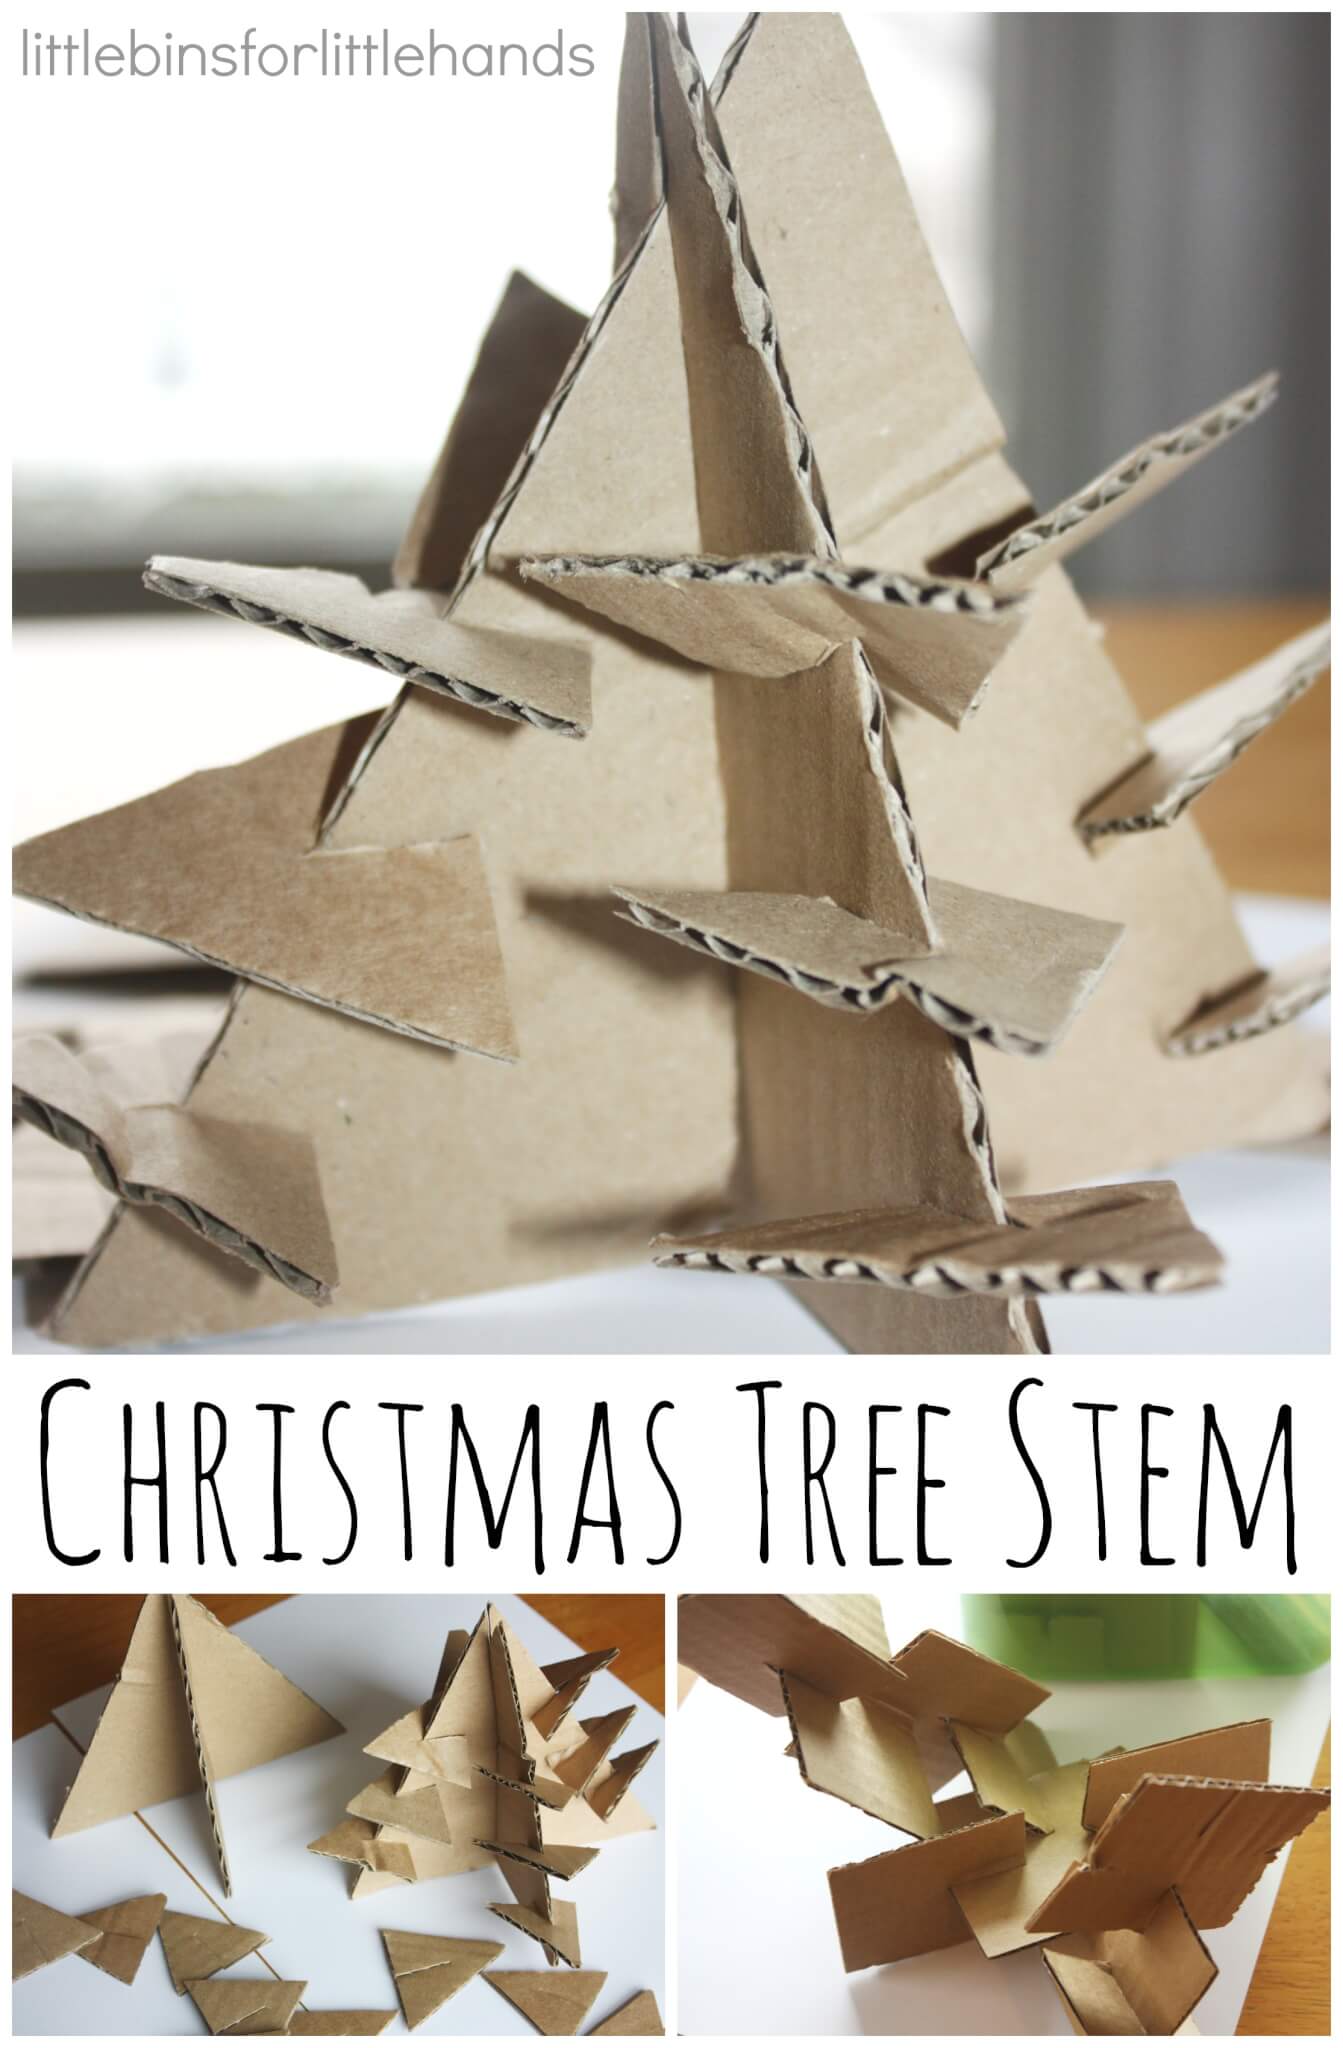 Christmas-tree-STEM-activity-with-cardboard-Christmas-trees.jpg